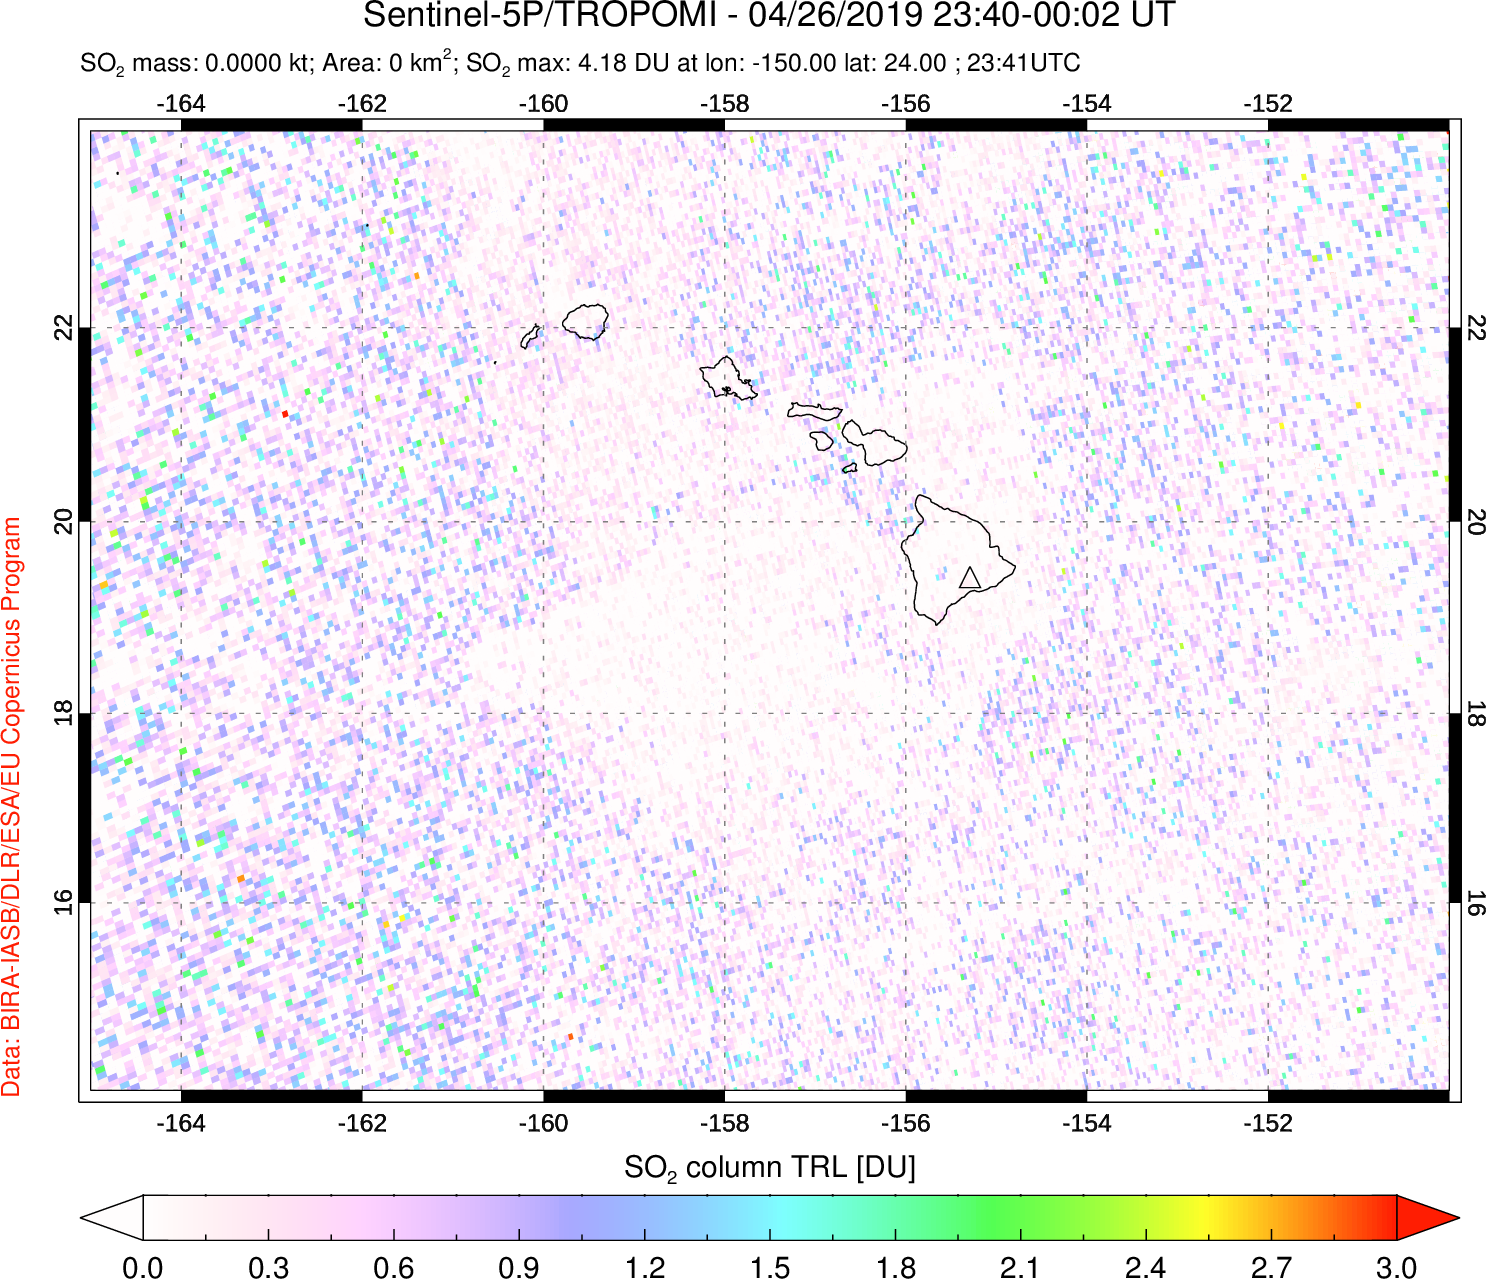 A sulfur dioxide image over Hawaii, USA on Apr 26, 2019.